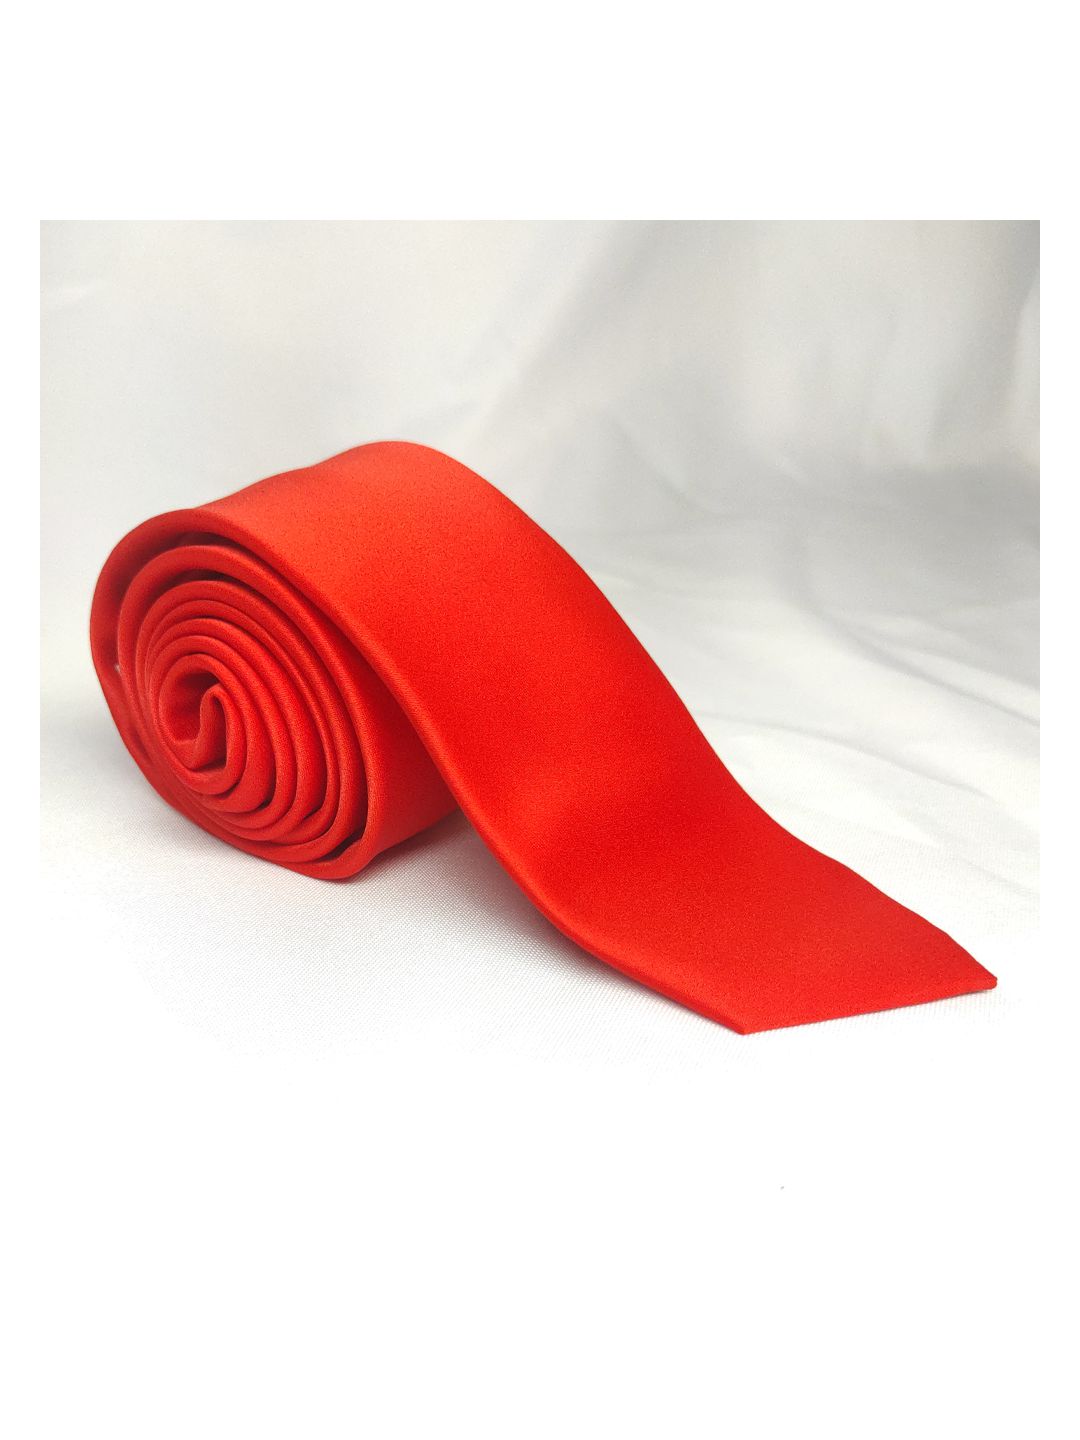 Gravata Slim Colors Vermelha - Roberto Alfaiate | Trajes fino sob medida